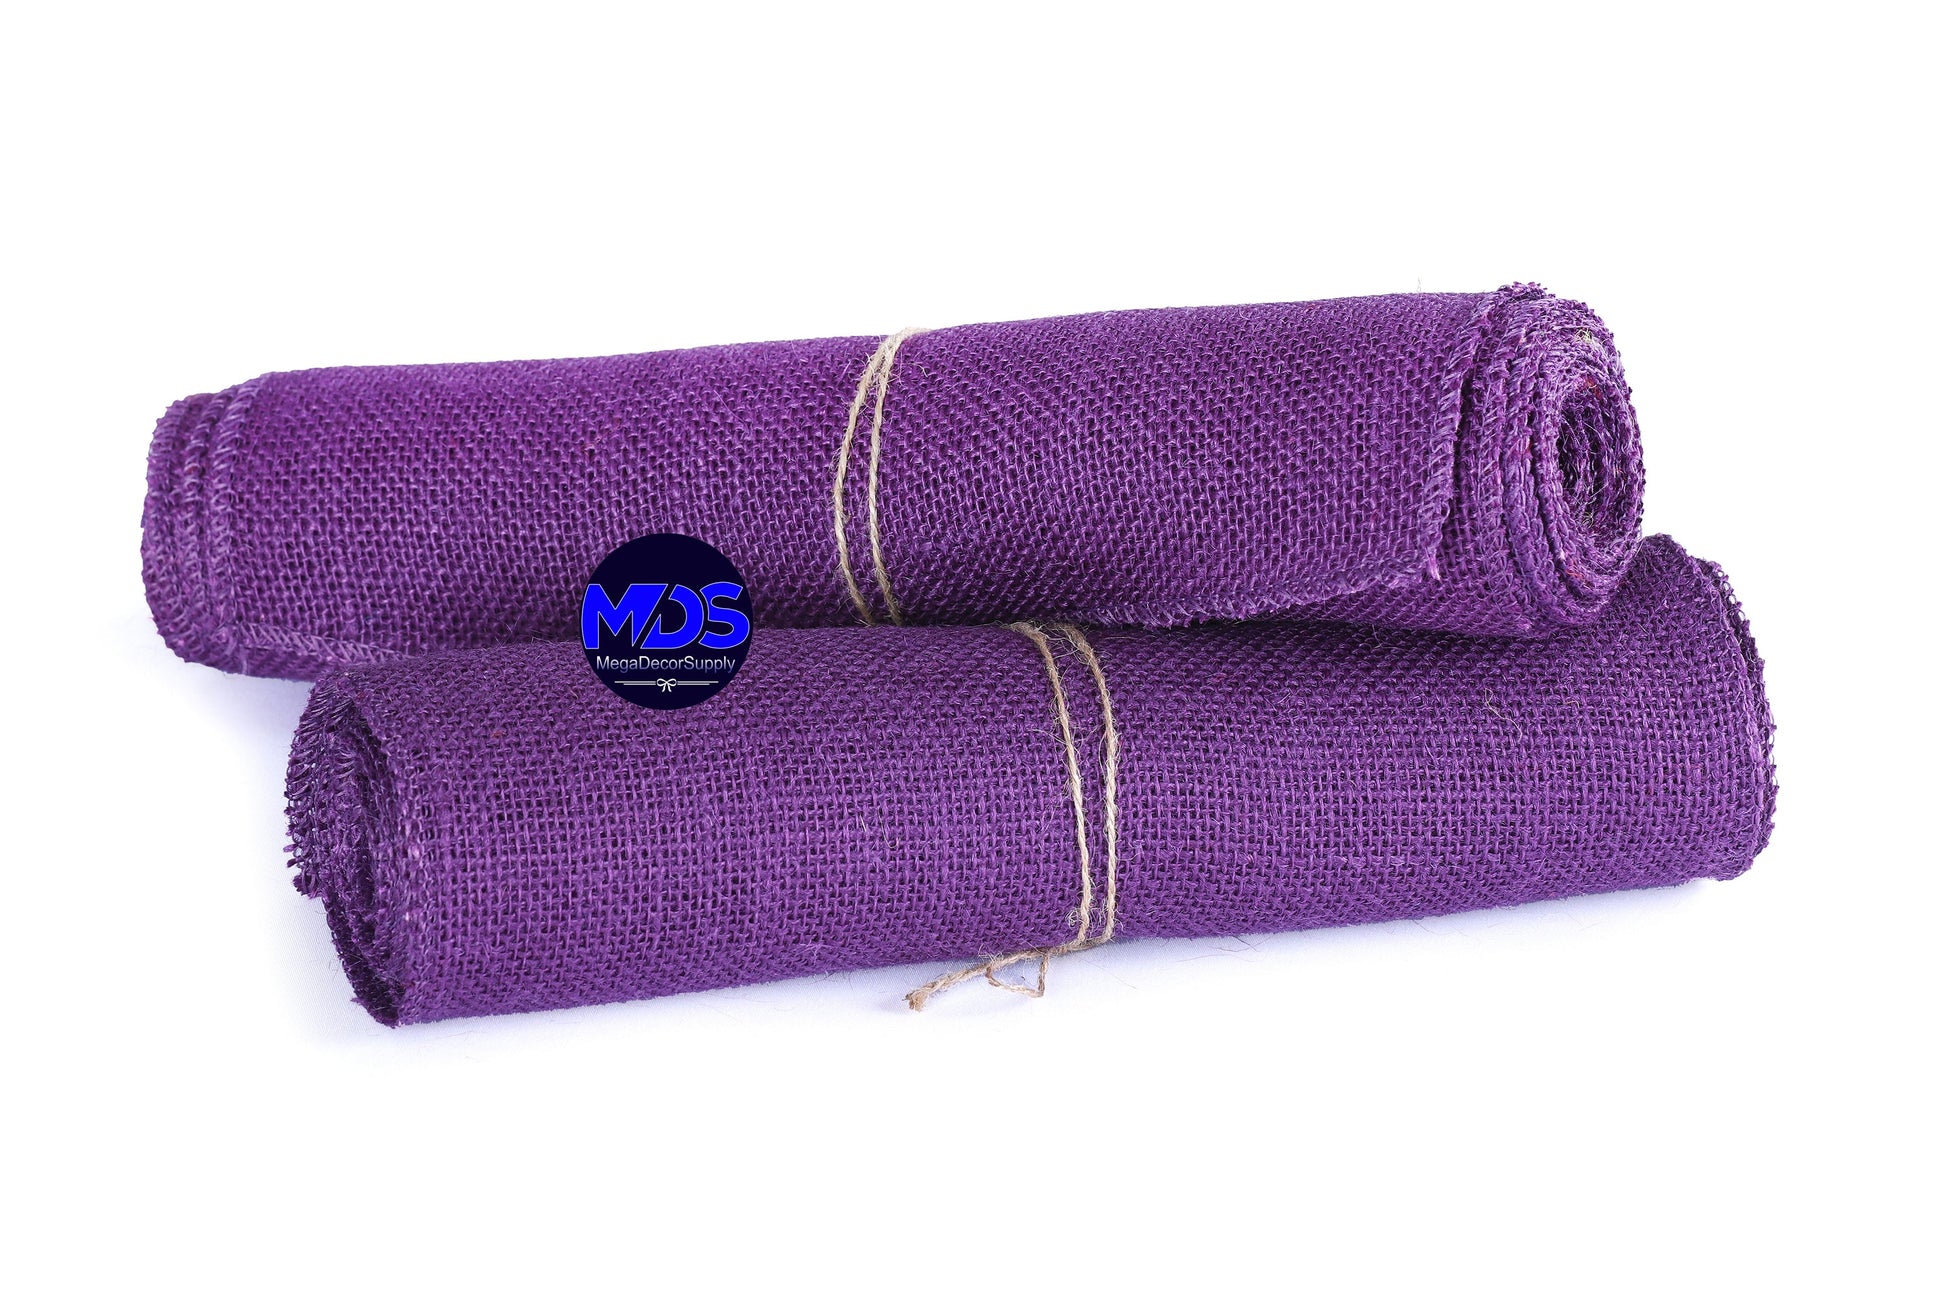 Cadbury Purple,a9cbf297-9a13-417f-aaae-980dfaece884